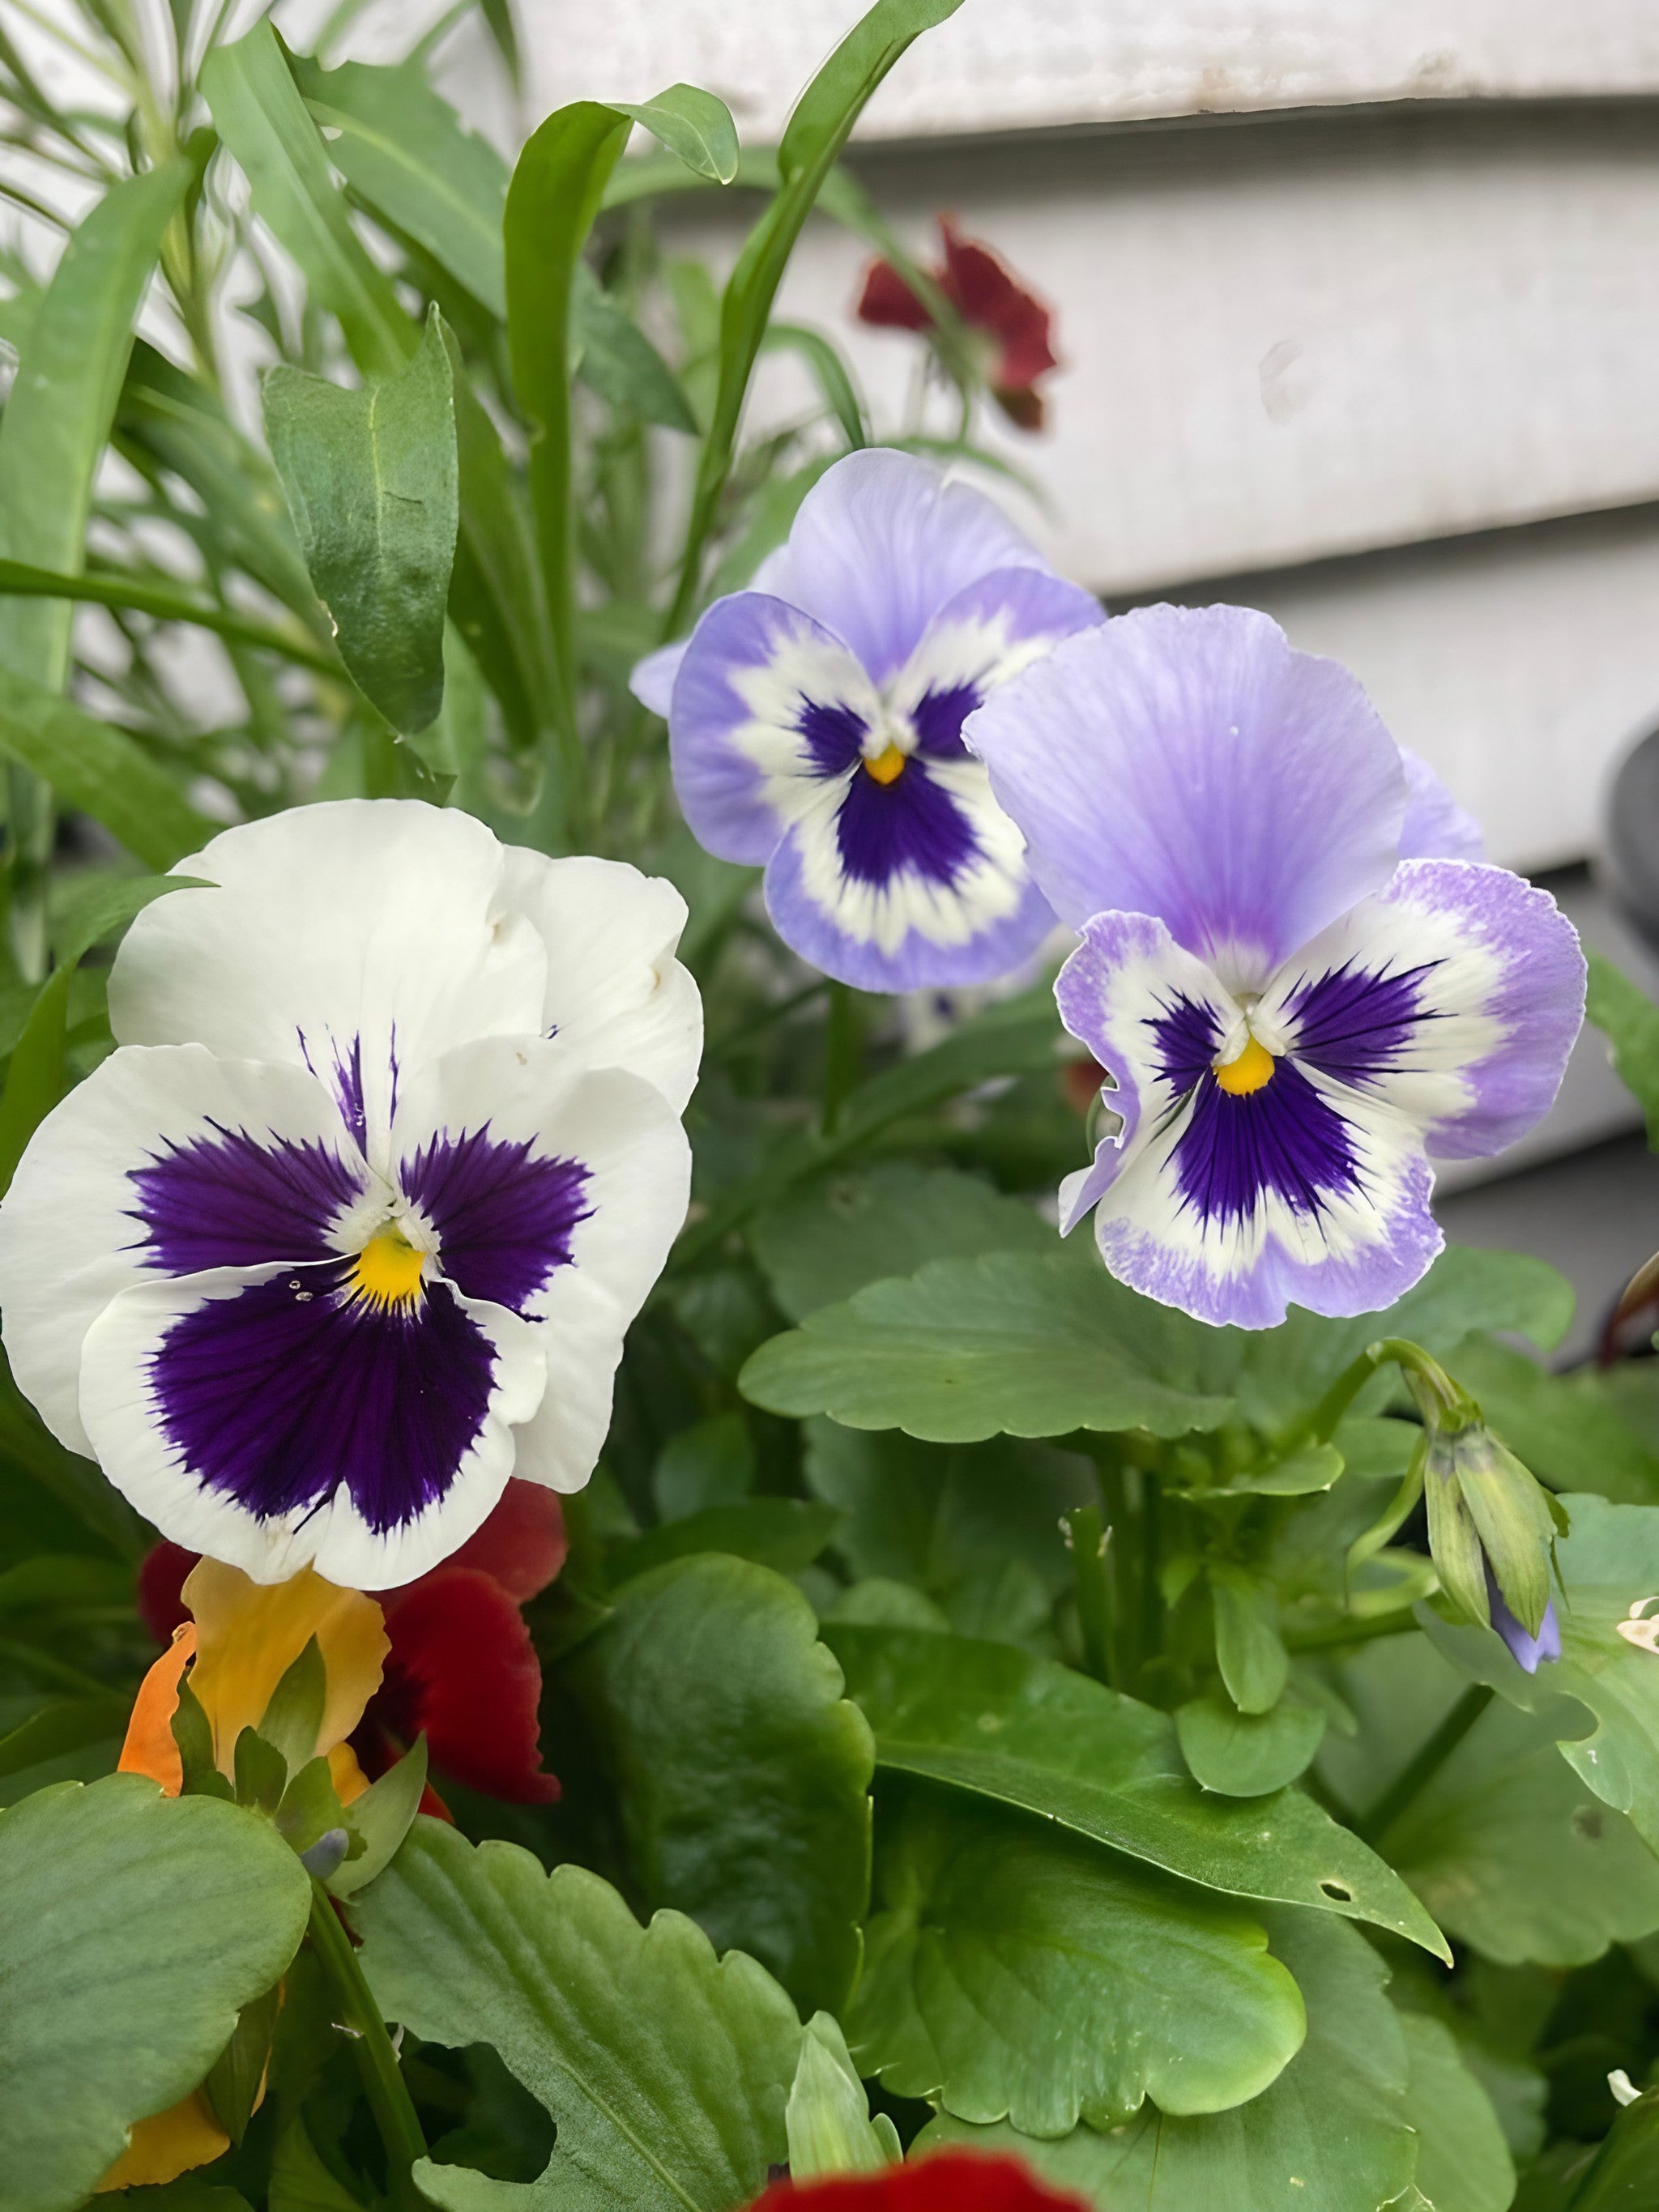 Viola Cornuta Large Flower Mix thriving in an outdoor garden setting